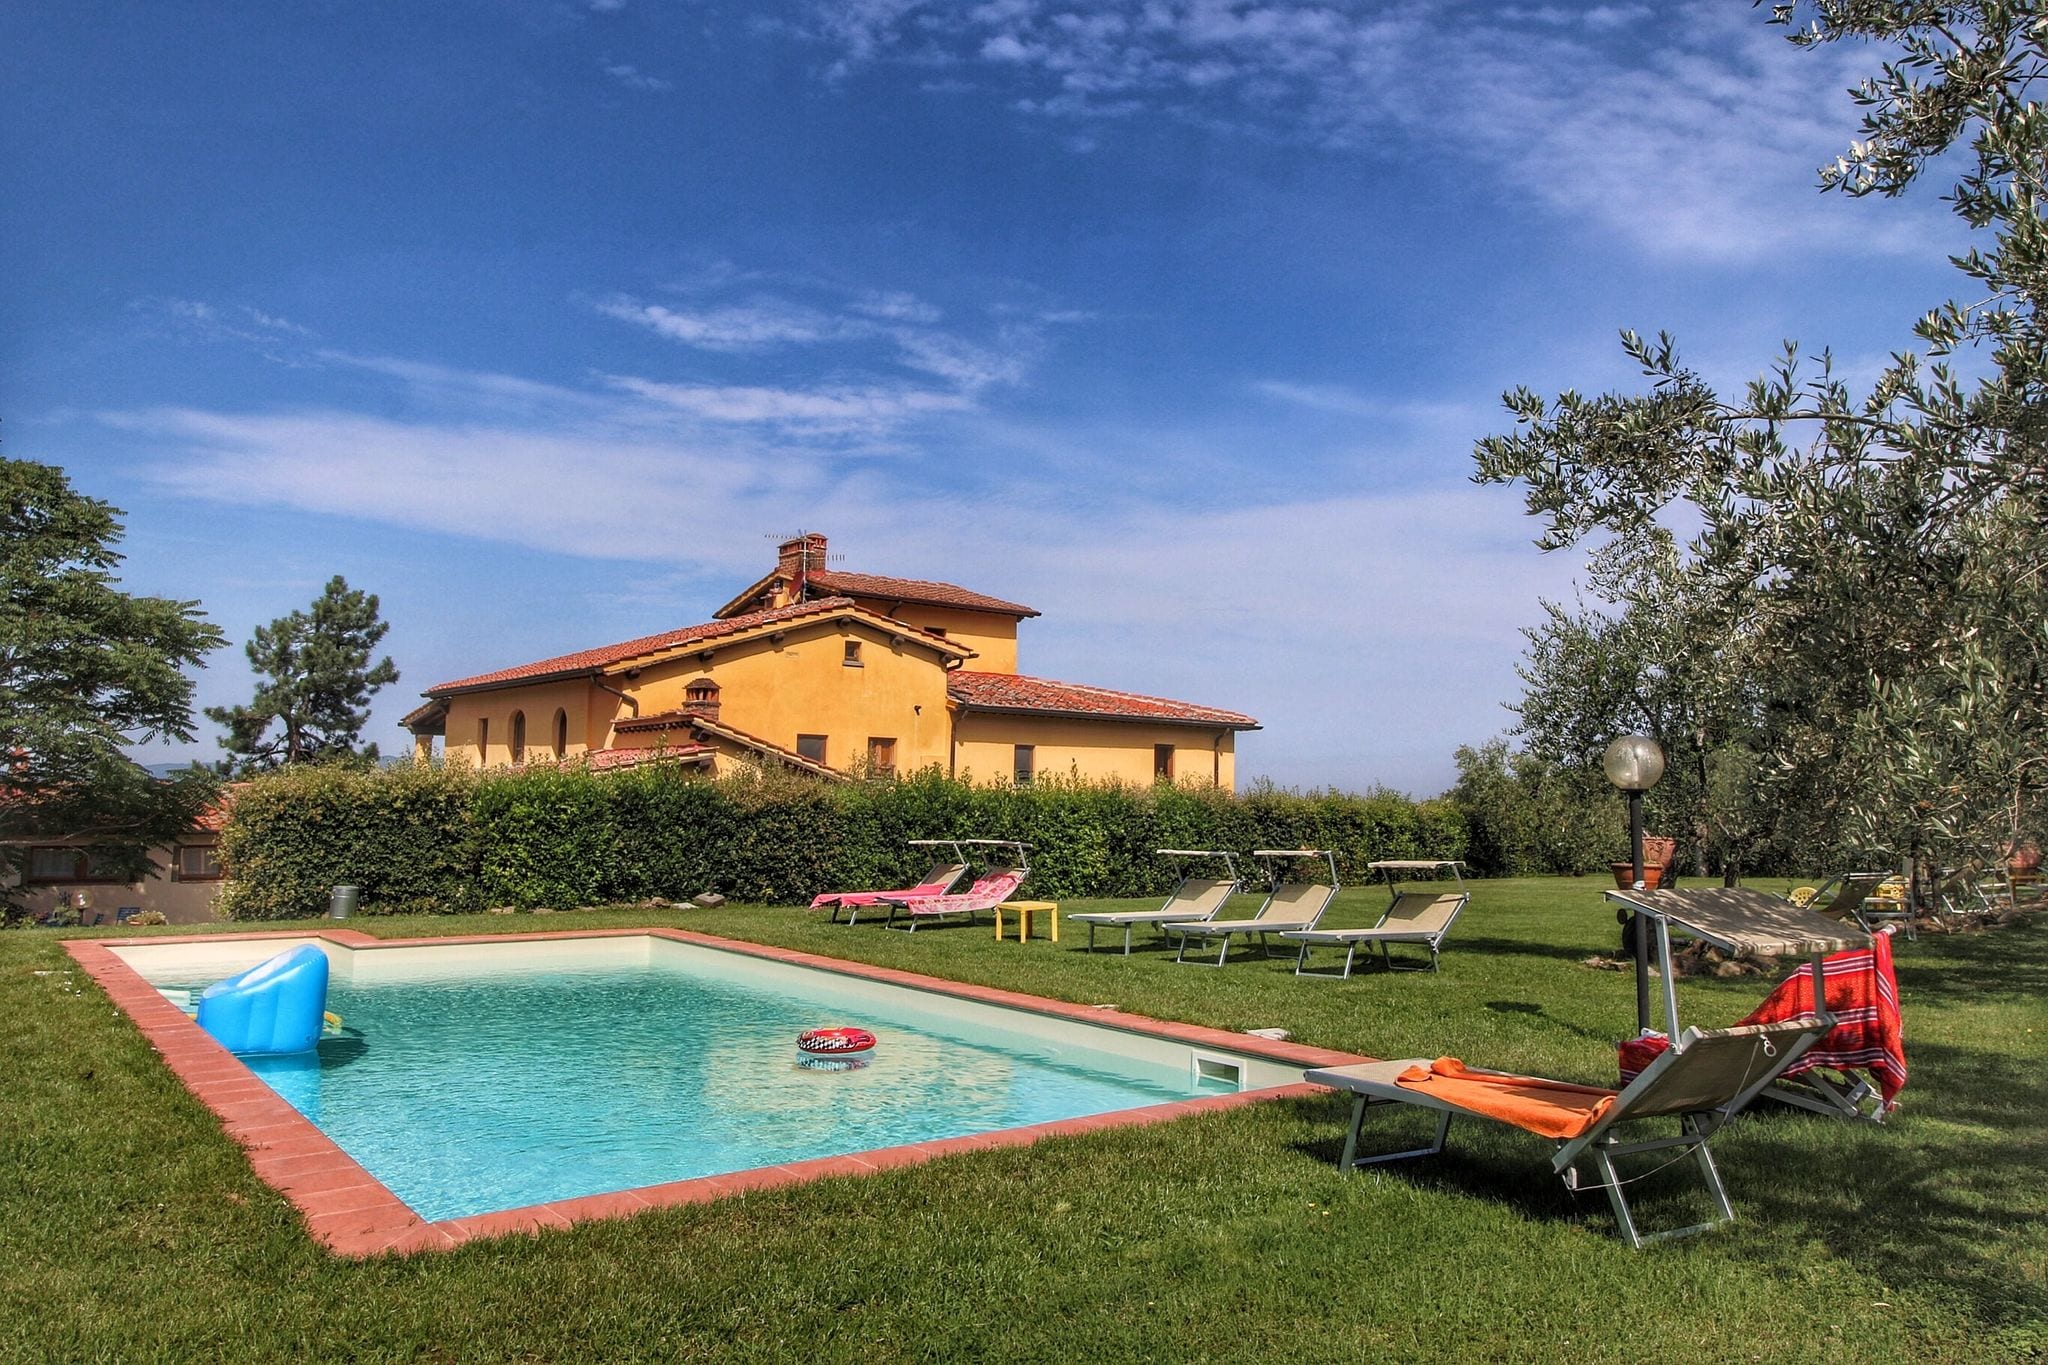 Splendid villa with swimming pool in Tuscany